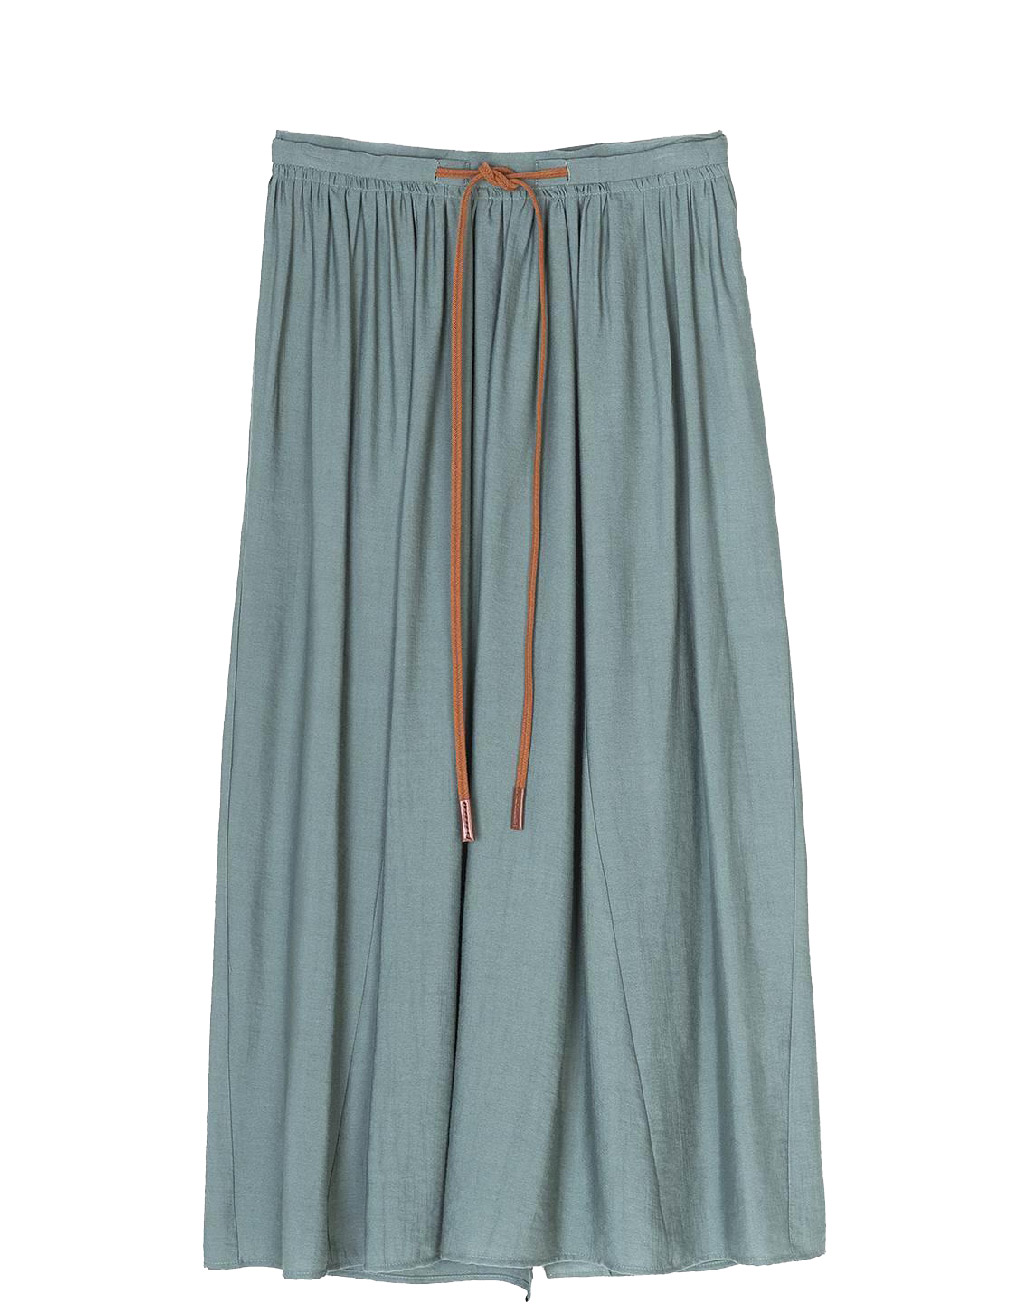 ALYSI – Daily crepe skirt